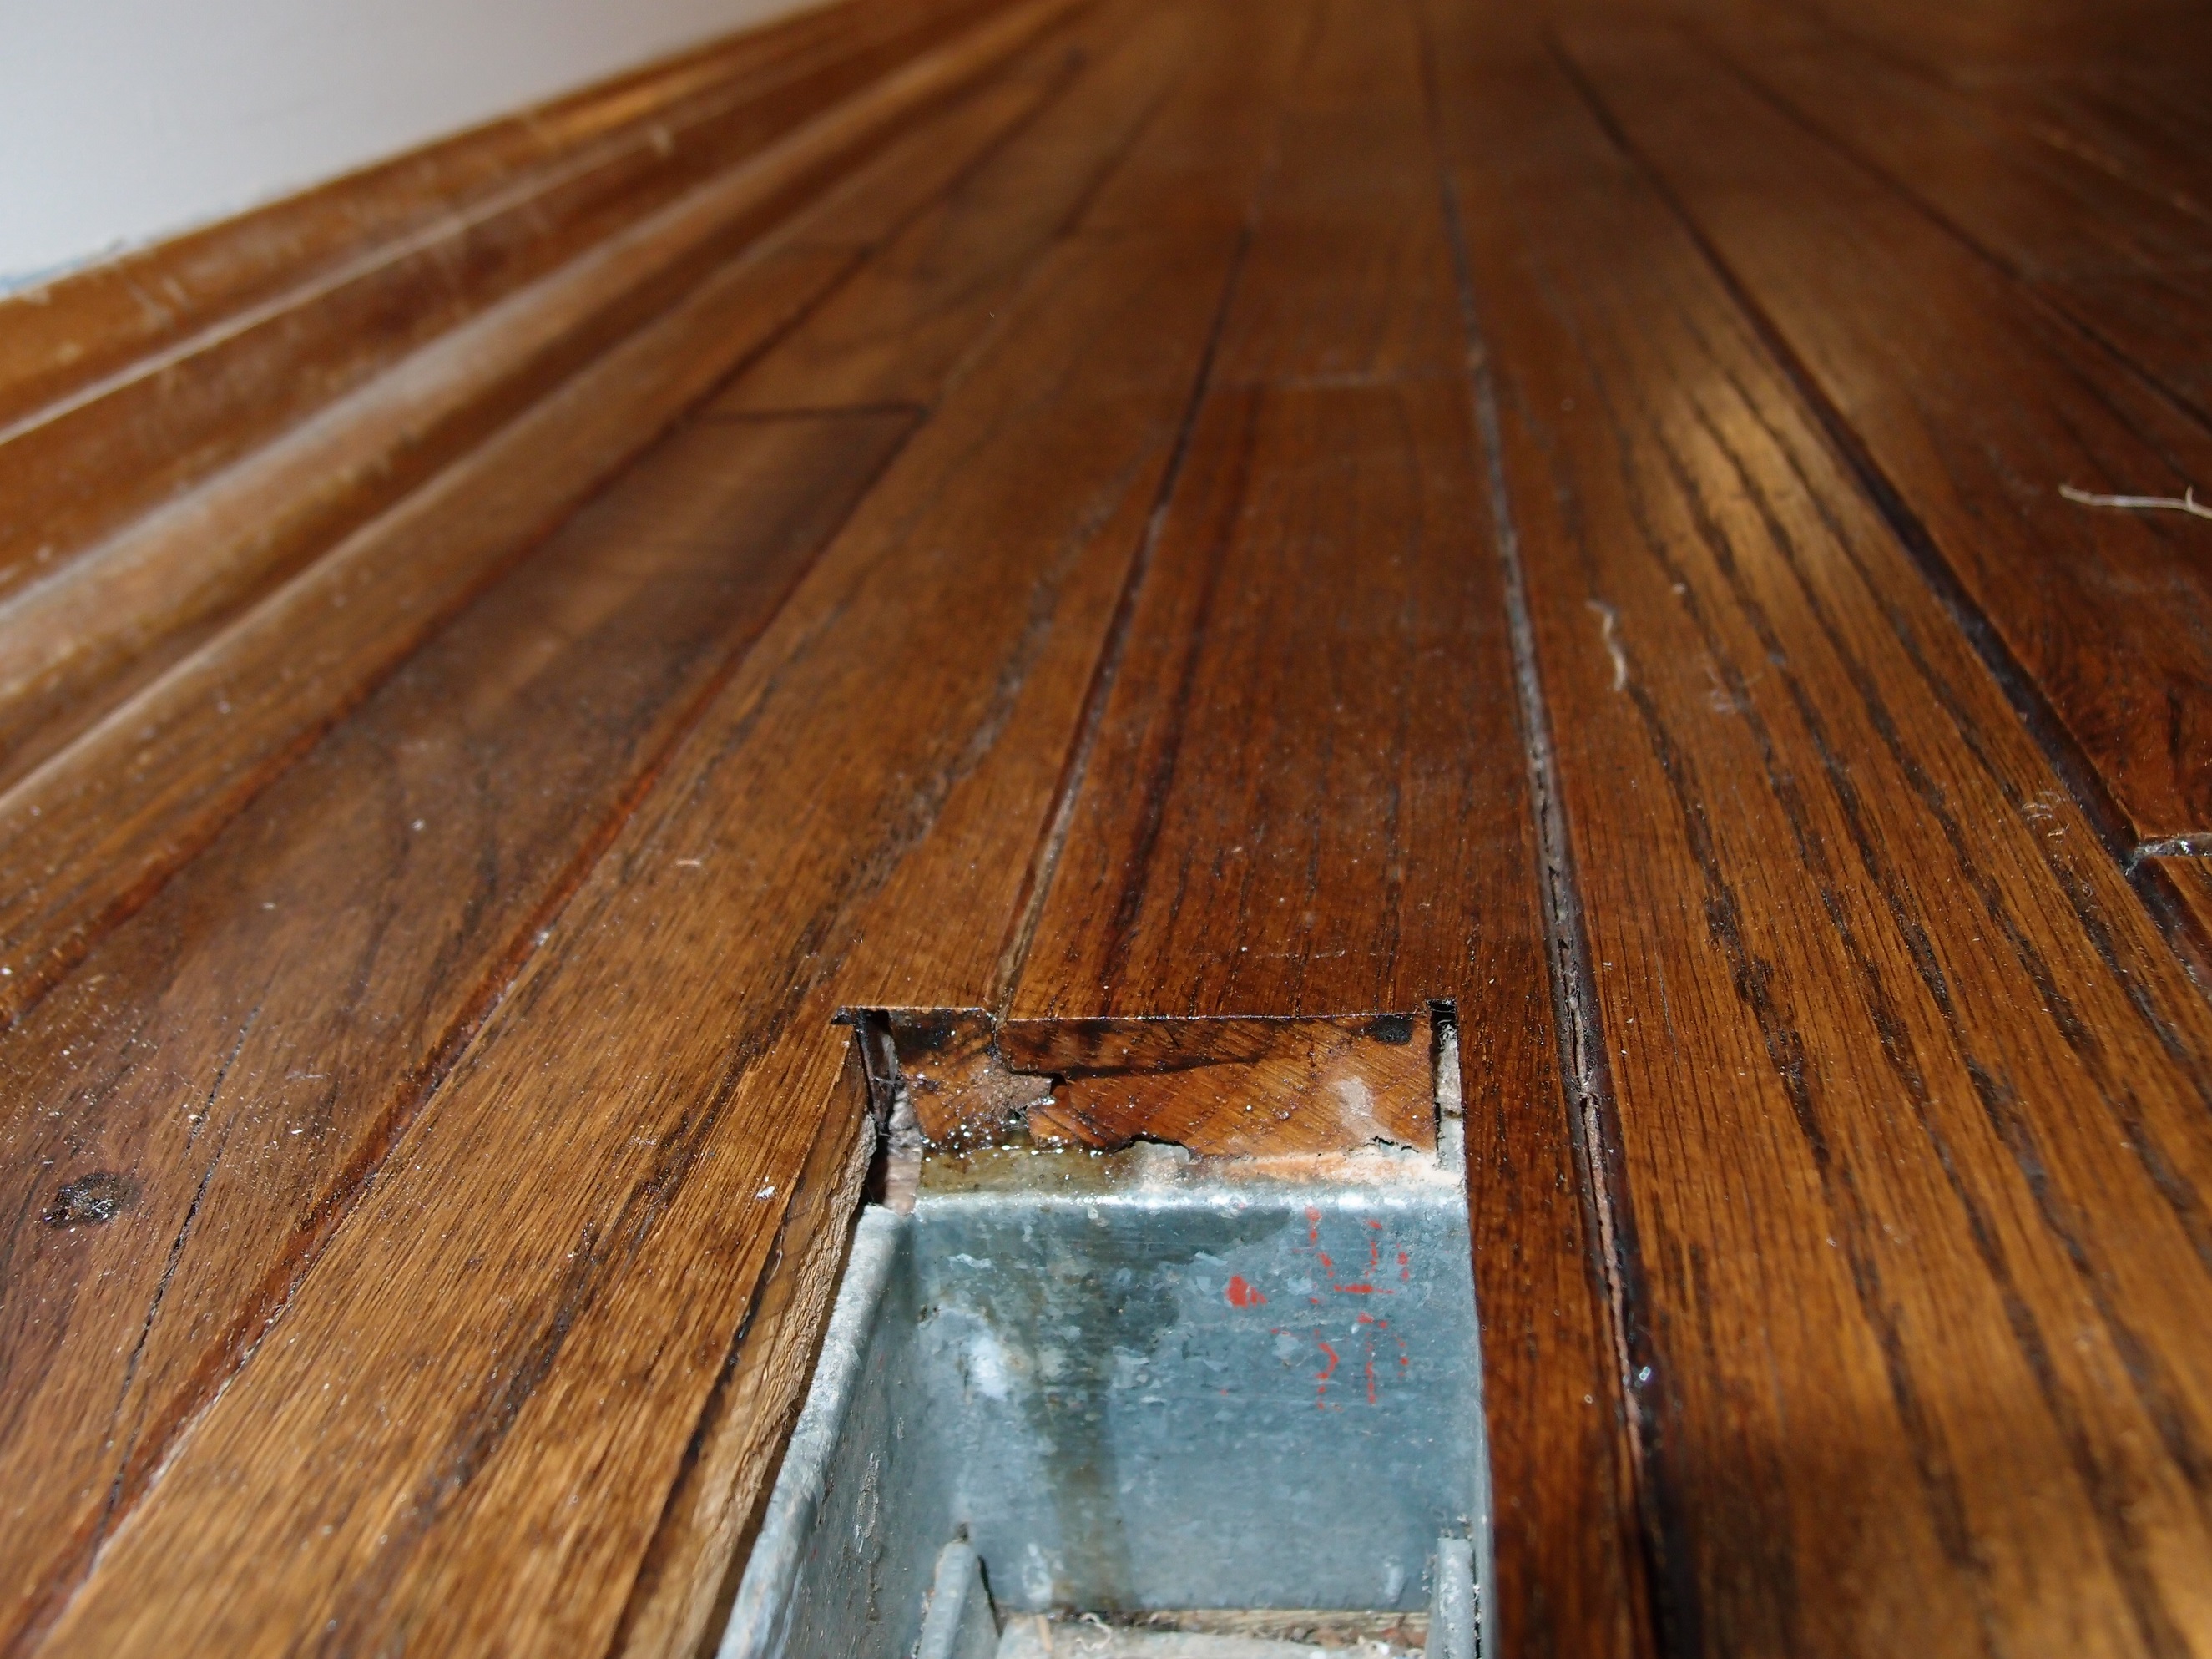 Refinishing Hardwood Floor With Edge, Can I Refinish Bruce Hardwood Floors